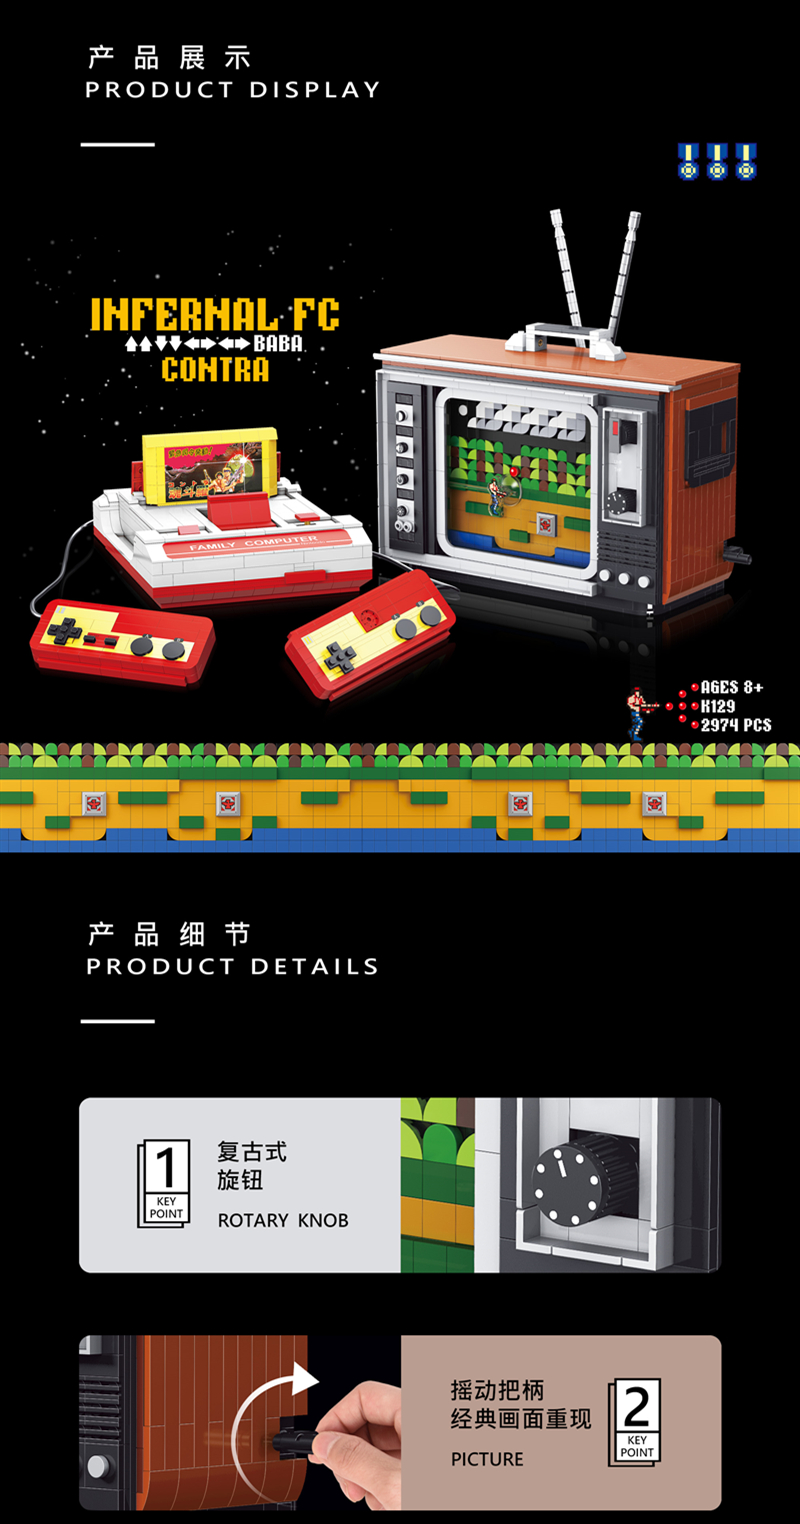 Super 18k K129 Contra Game Console Building Bricks Toy Set